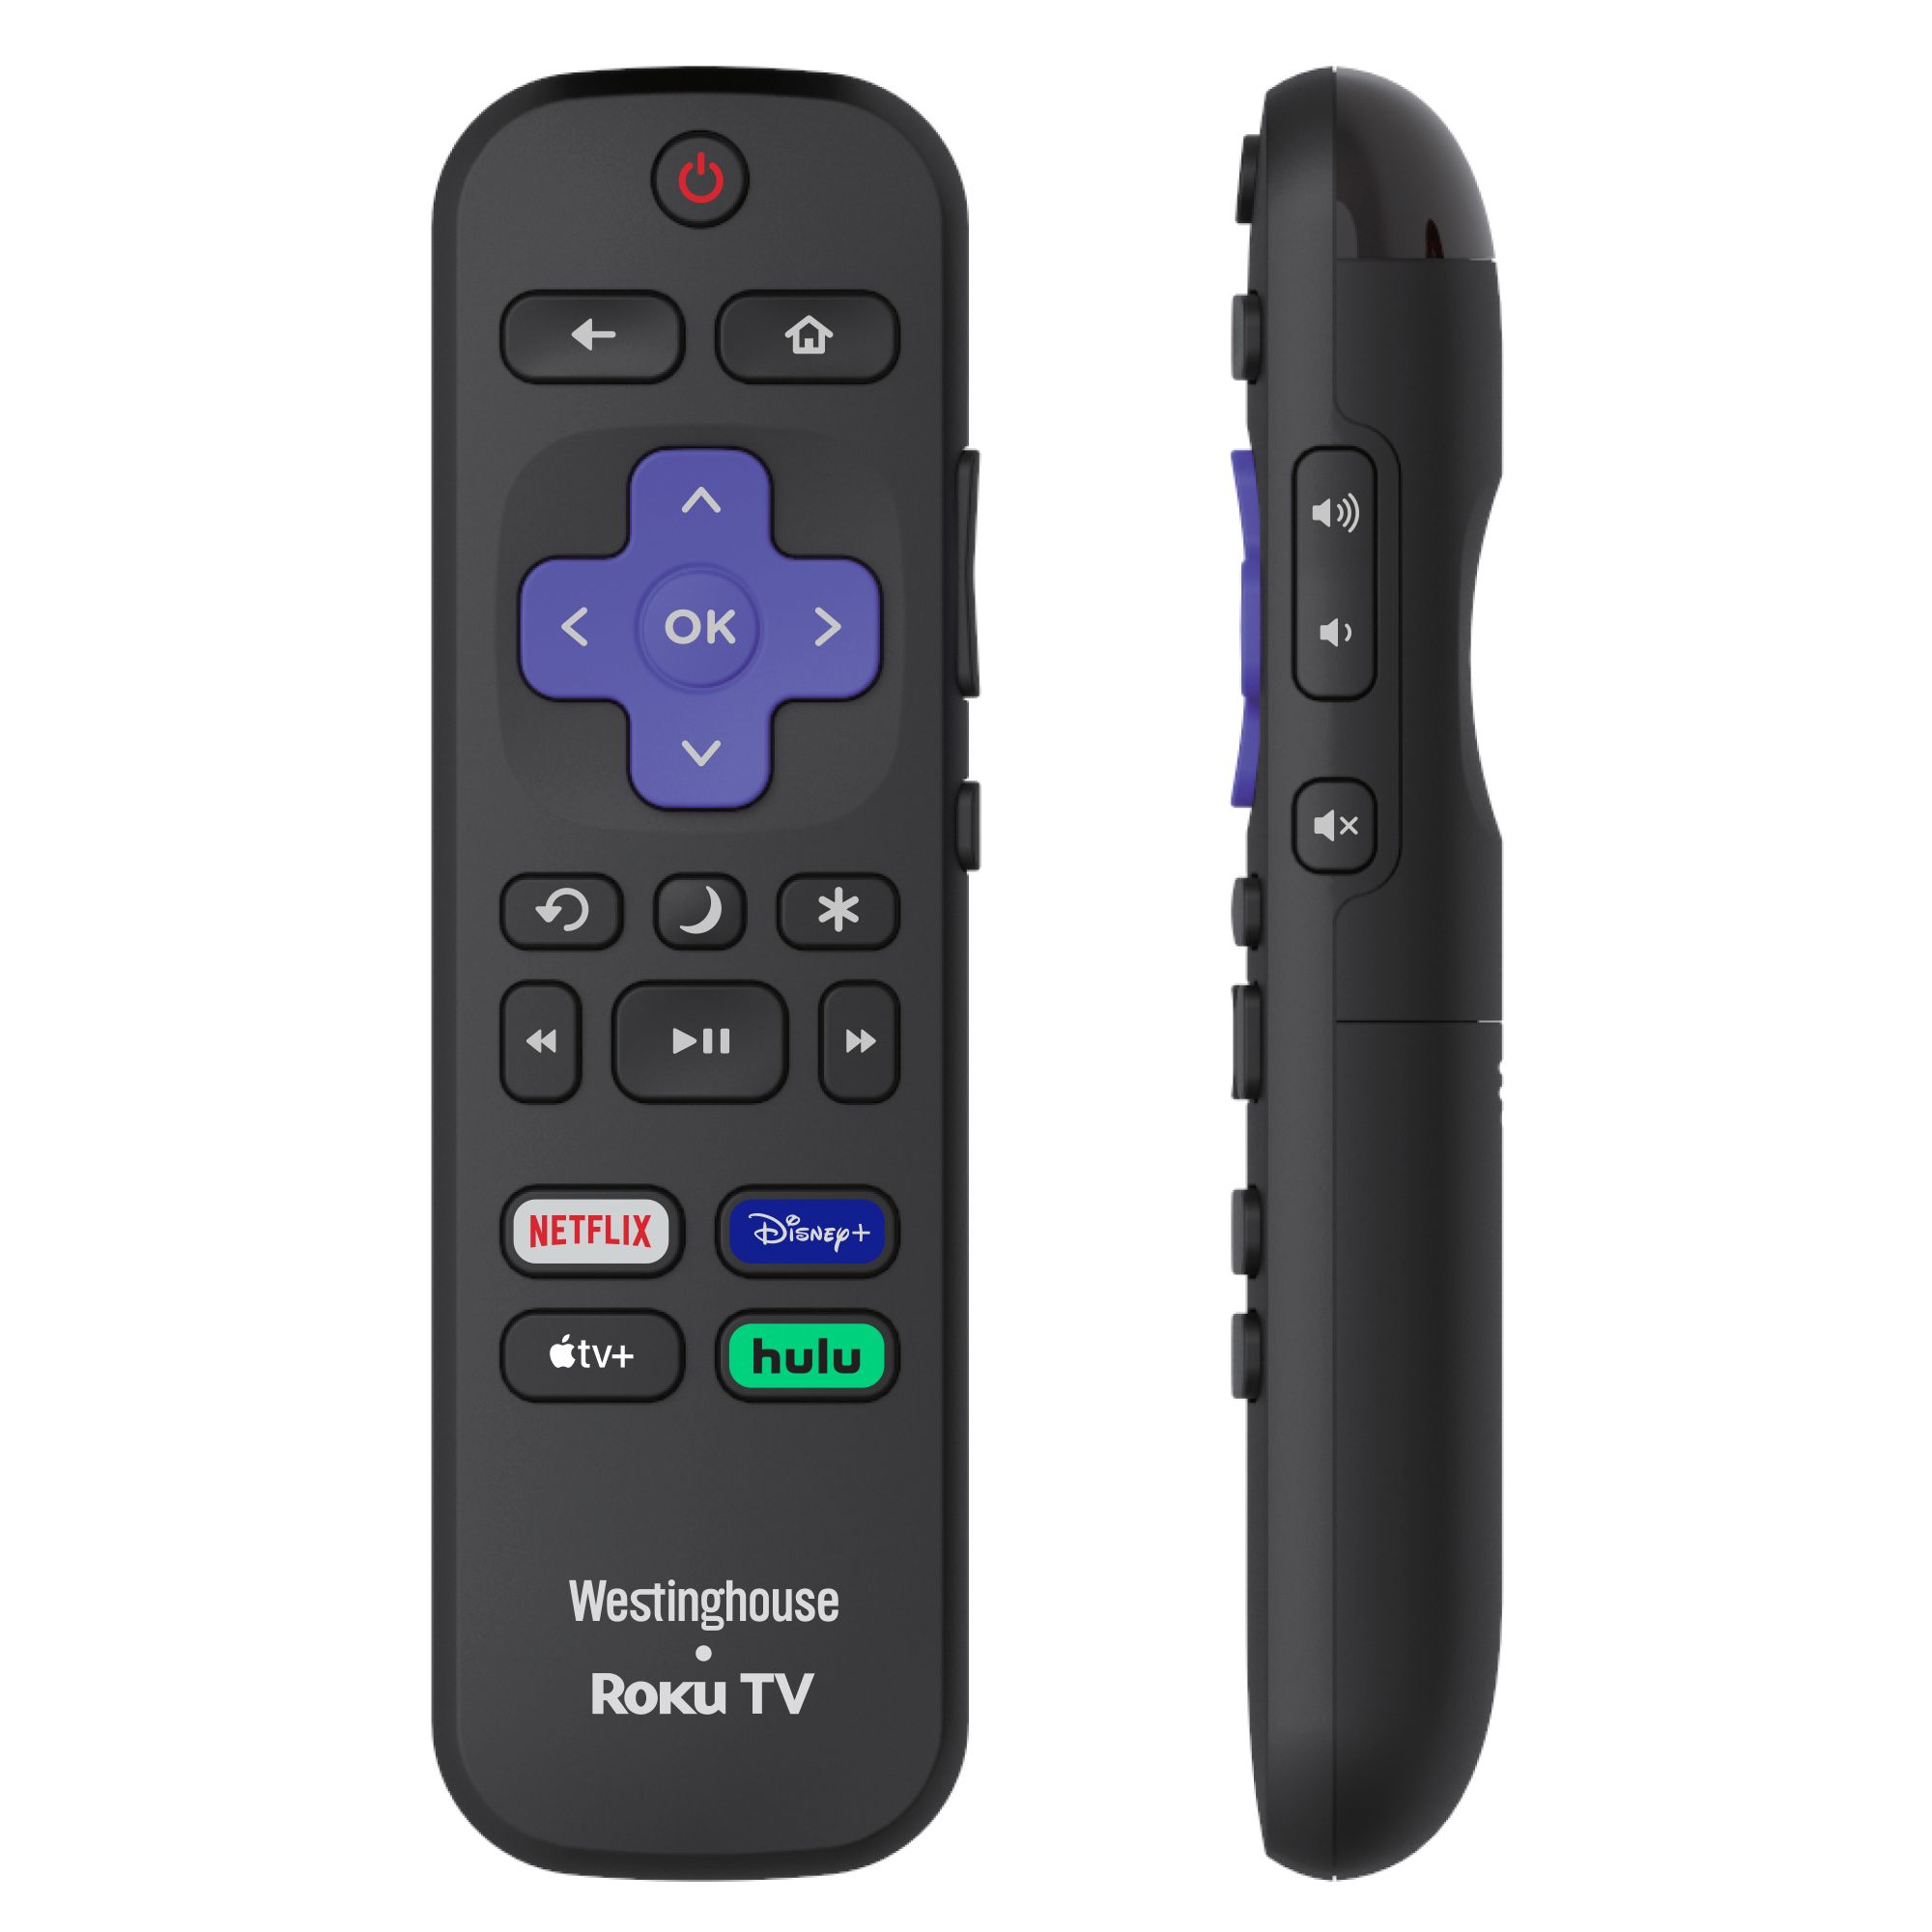  Westinghouse Roku TV - 42 Inch Smart TV, 1080P LED